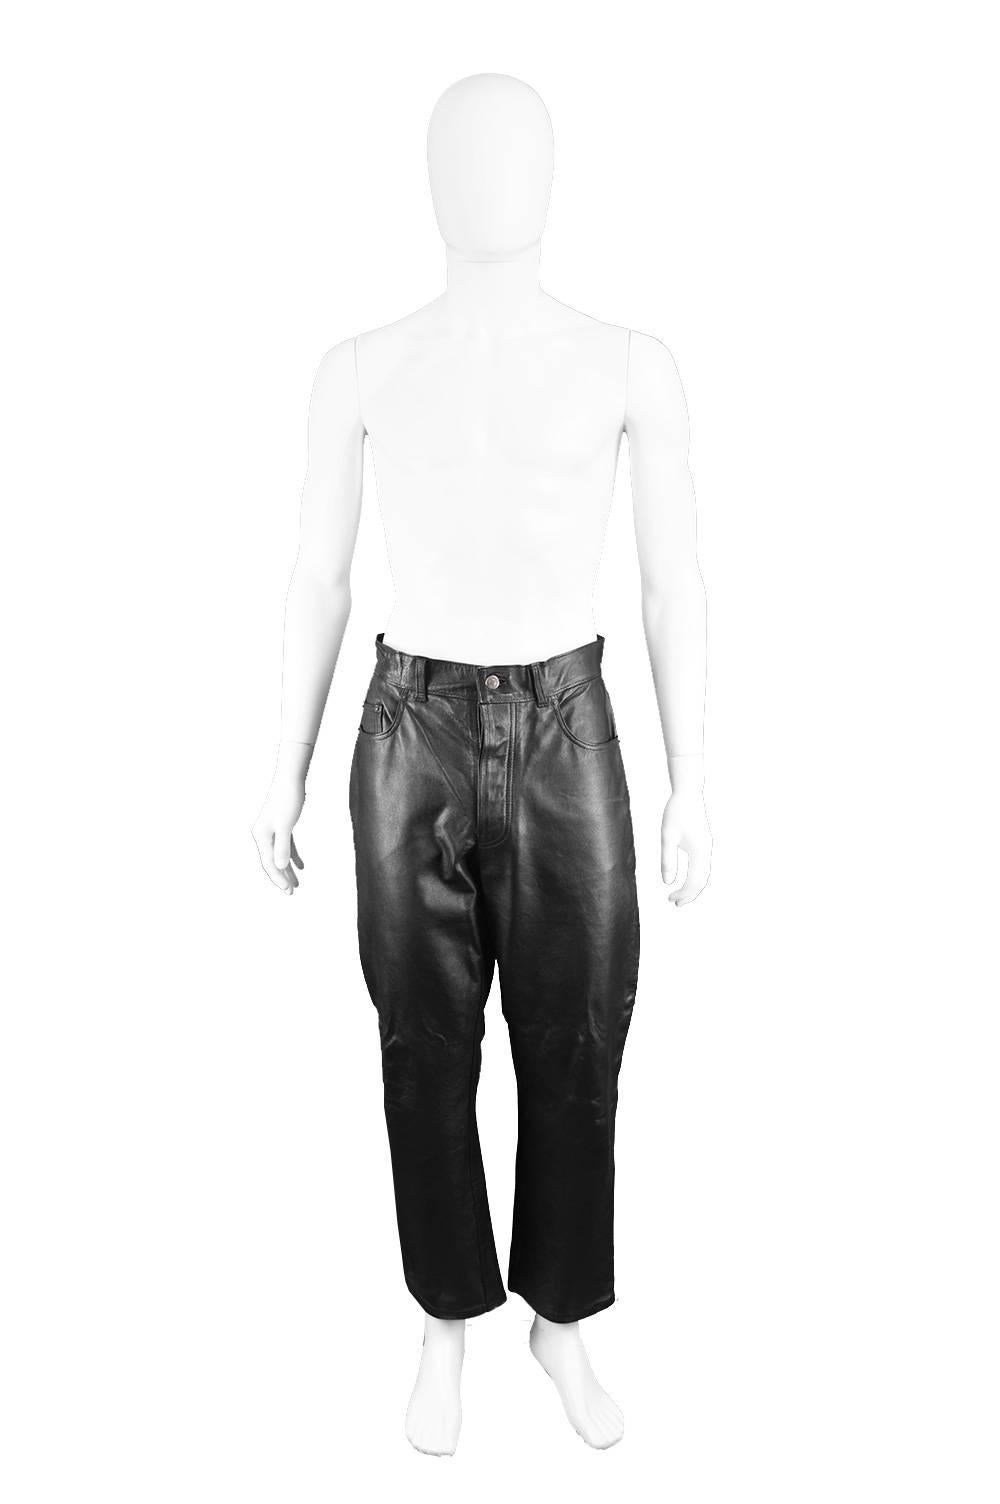 Paul Smith Men's Vintage Black Leather Straight Leg Pants, 1990s

Size:
Waist -  30” / 76cm
Hips - 40” / 101cm
Inside Leg - 28” / 71cm
Rise - 13” / 33cm

Condition: Excellent Vintage Condition - Light signs of wear as found with vintage leather. No